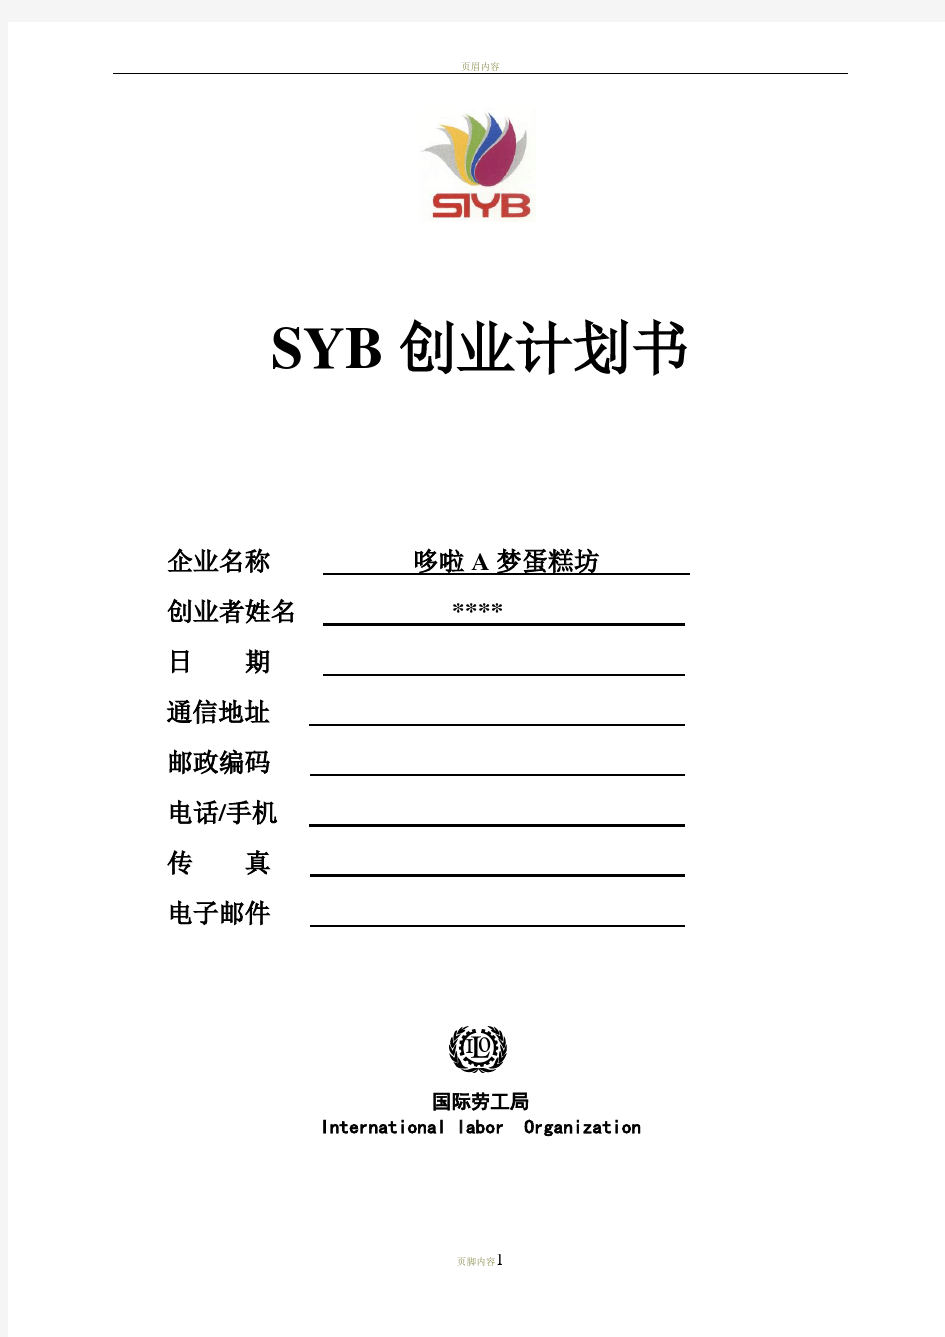 SYB创业计划书(蛋糕坊)